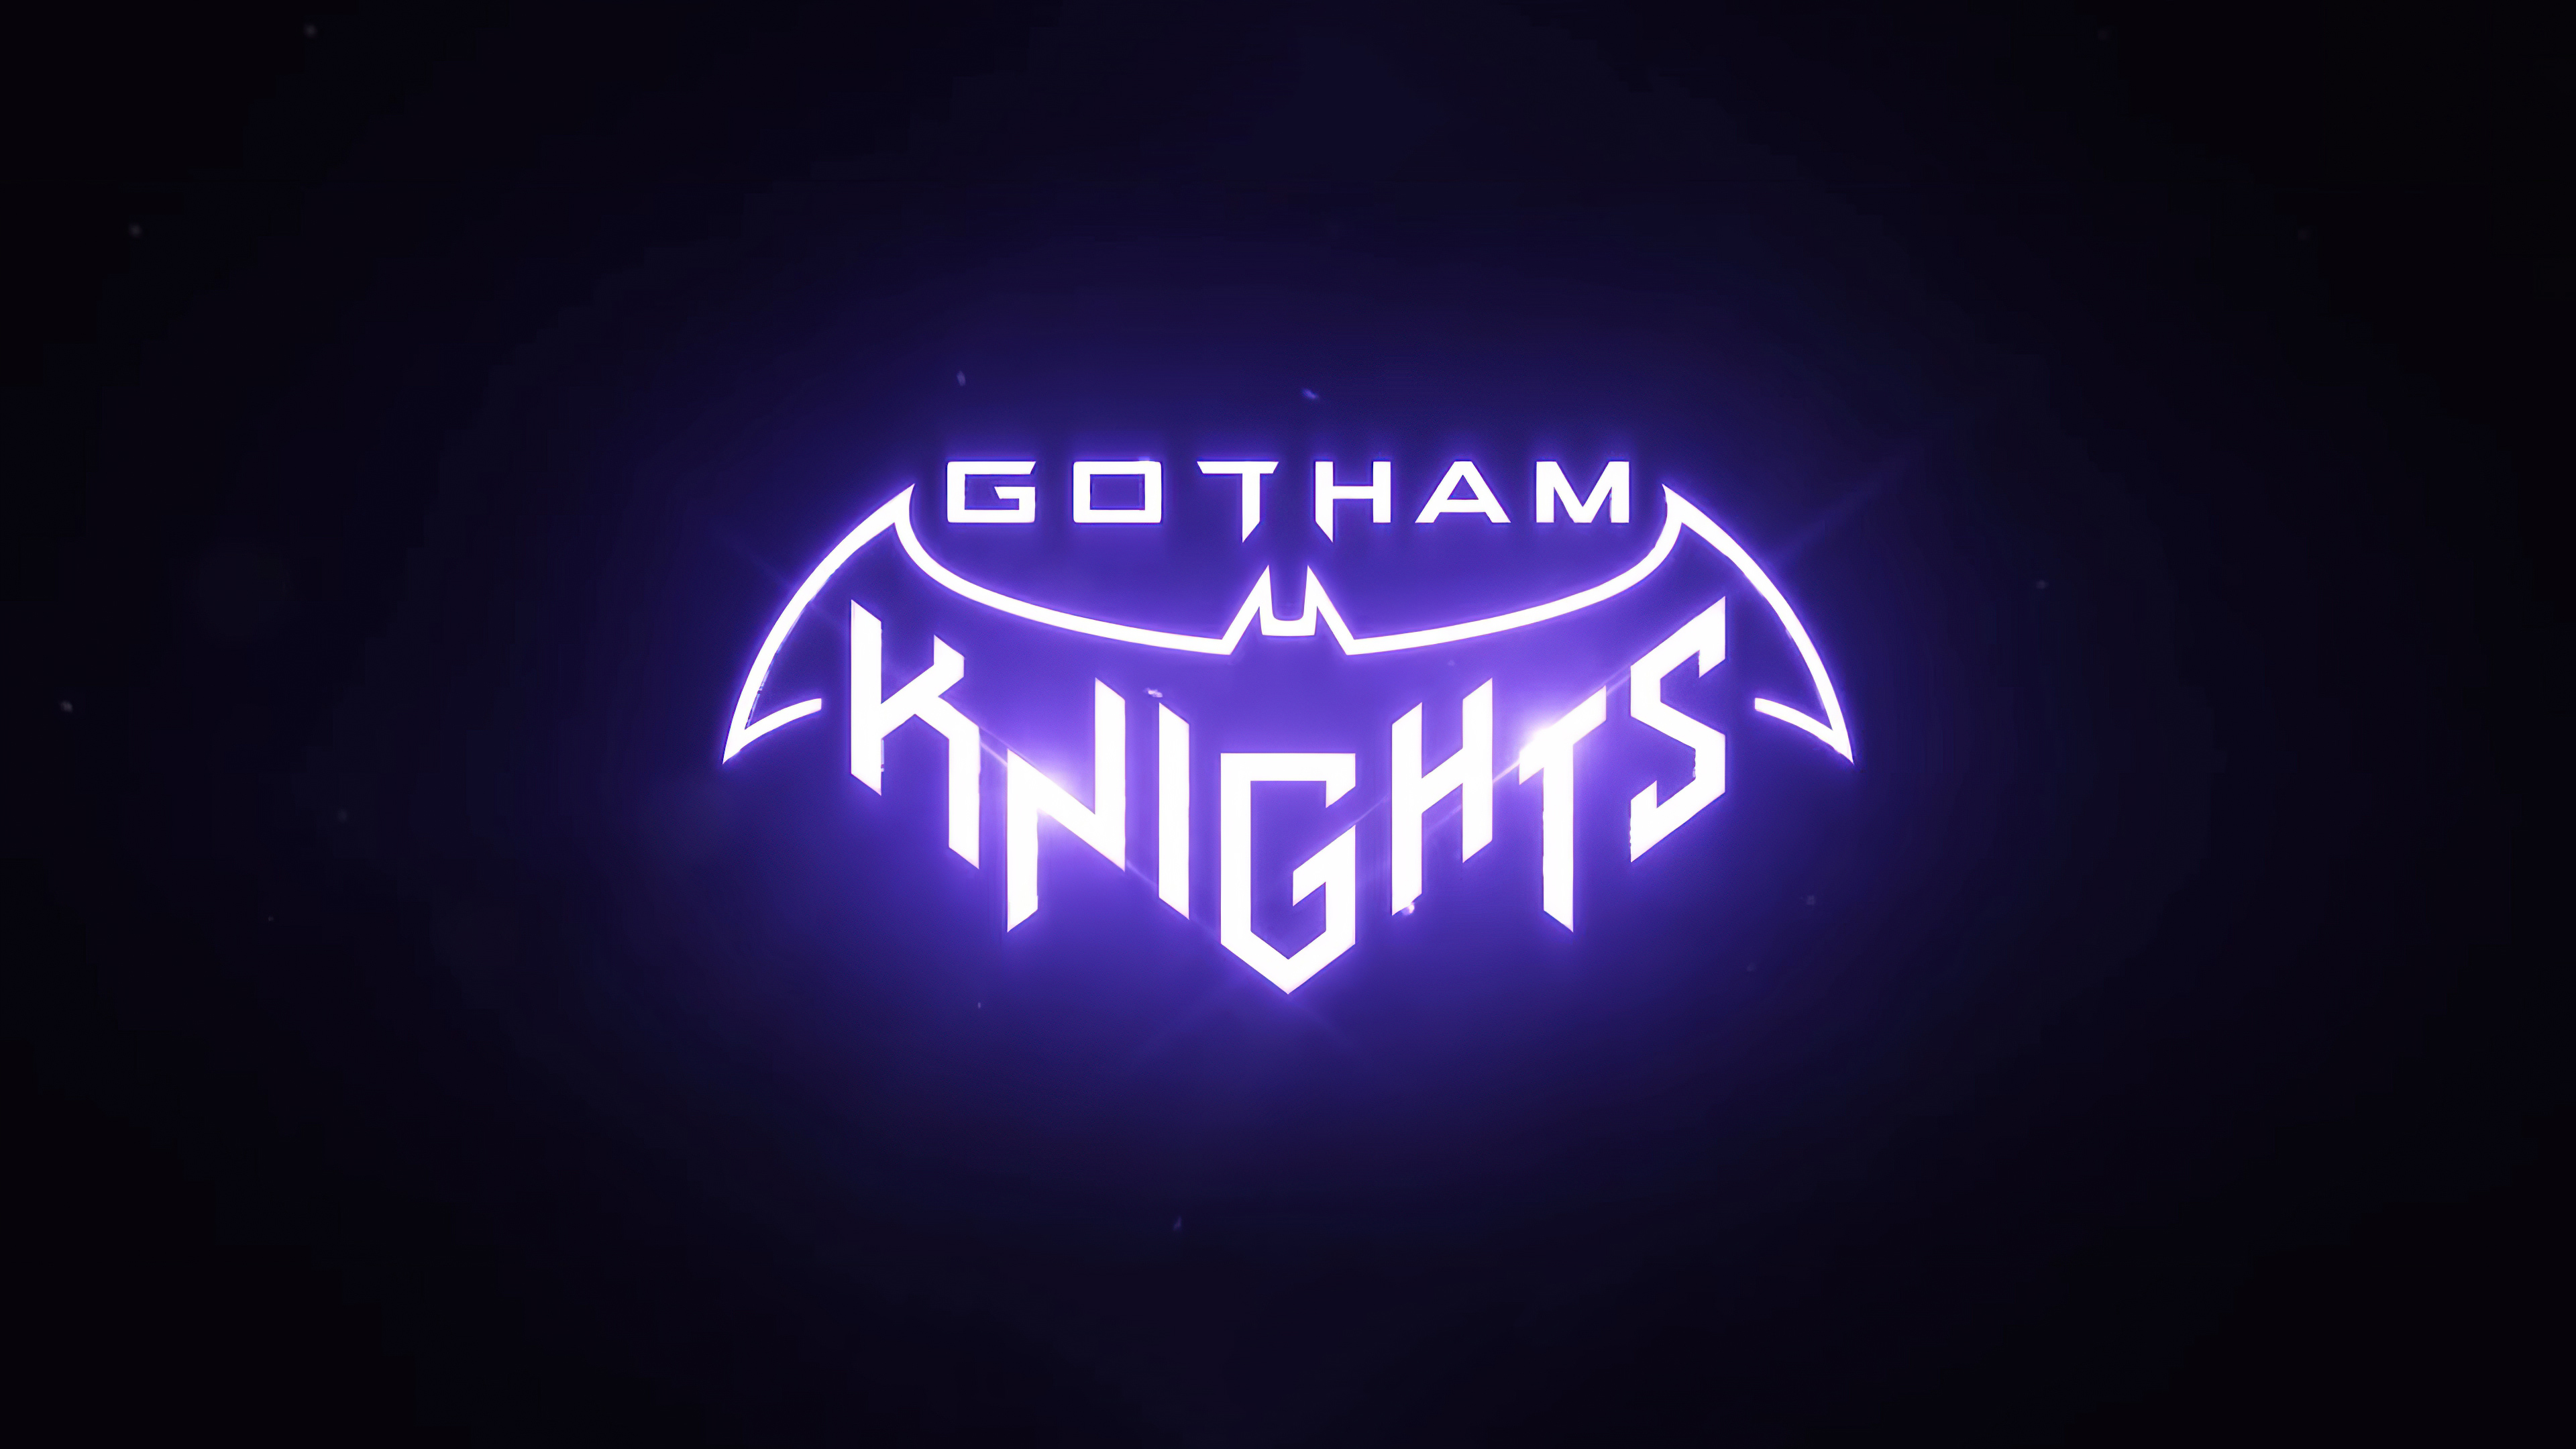 free download gotham knights pc